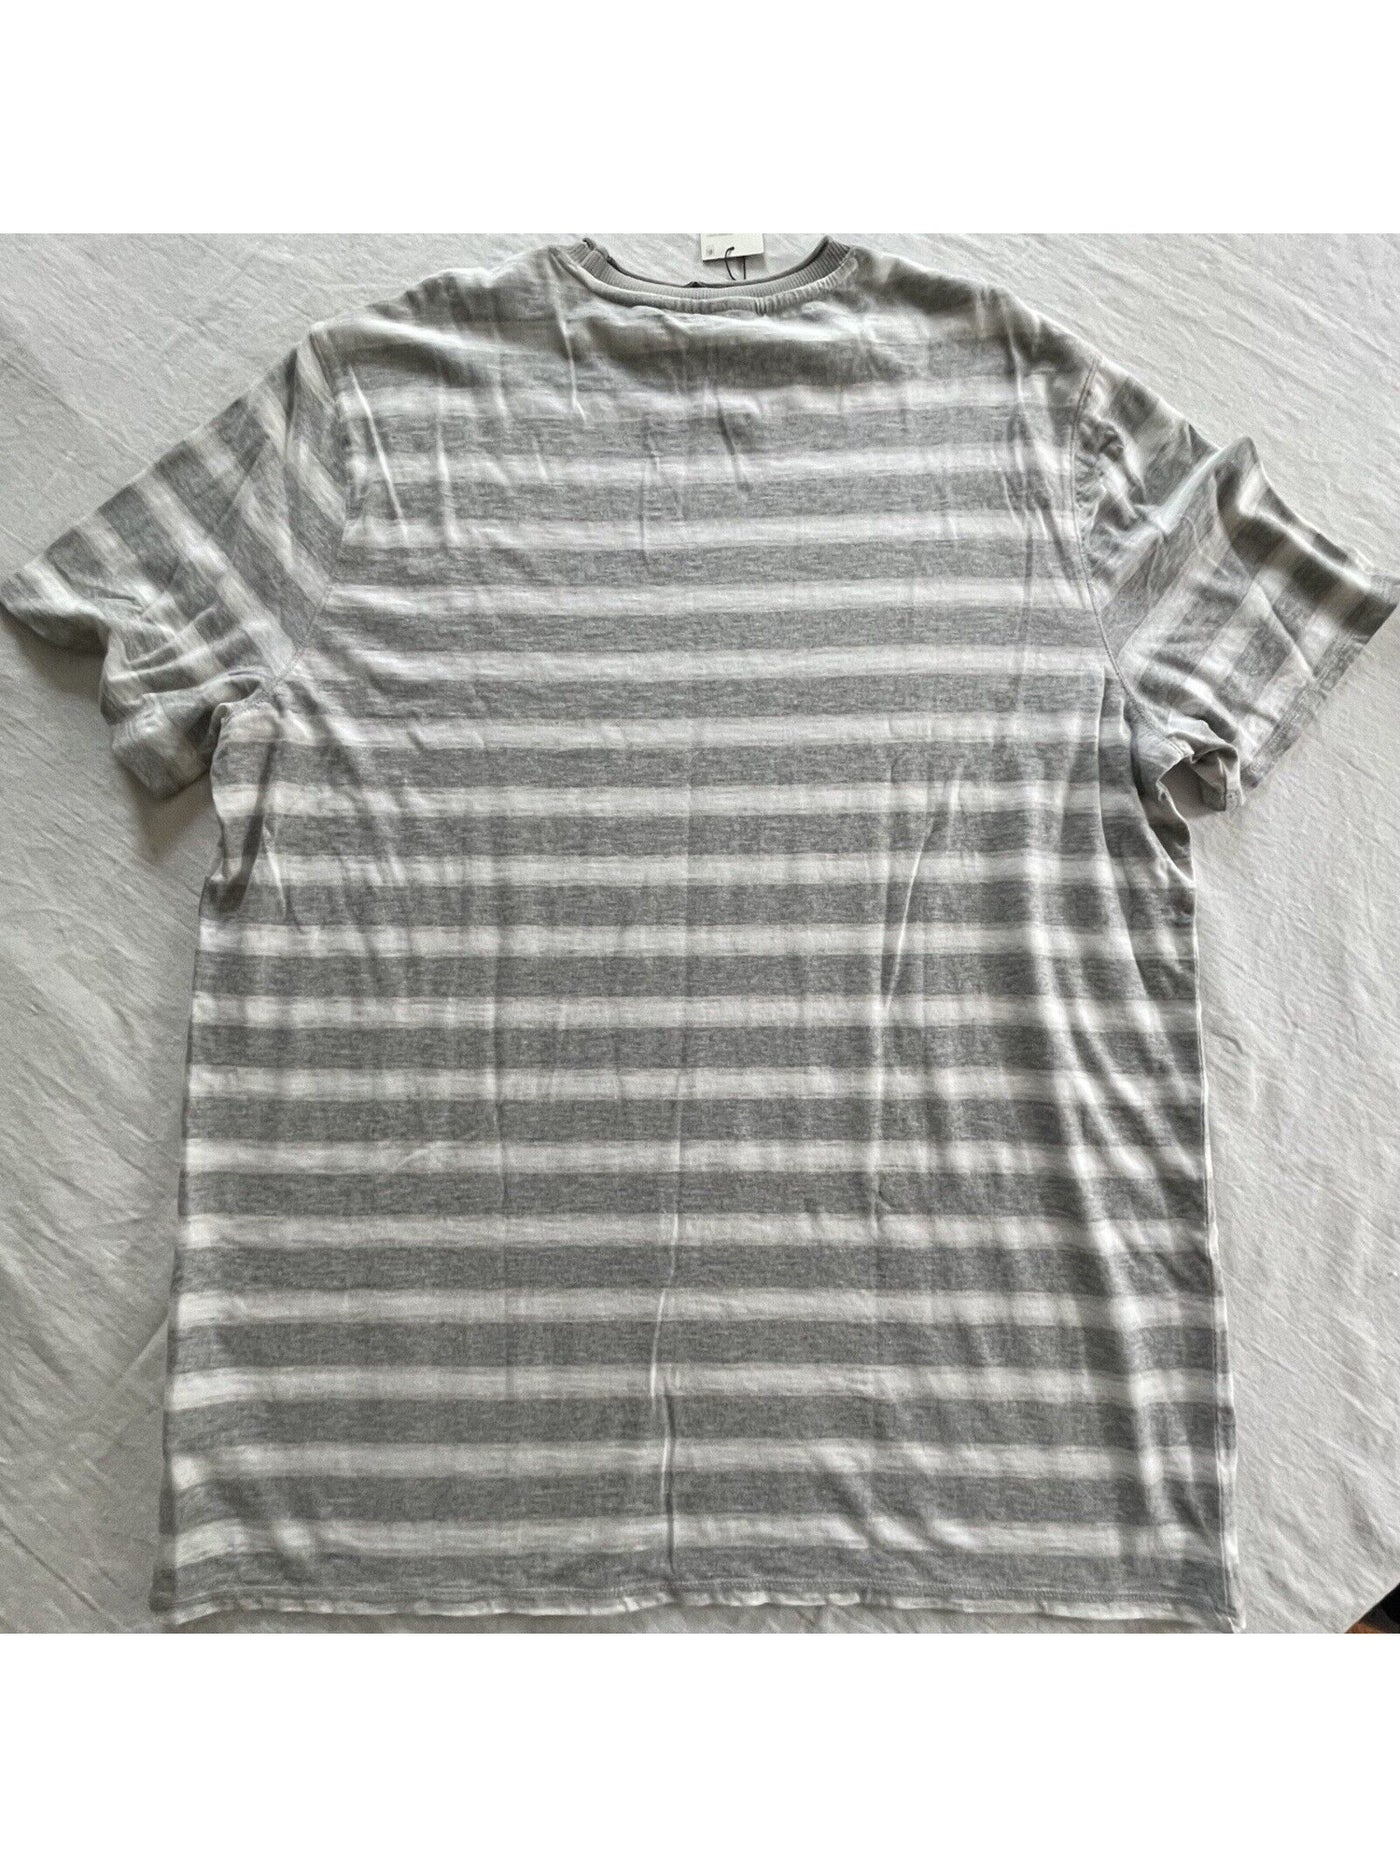 MICHAEL KORS Mens Gray Striped Short Sleeve T-Shirt XXL